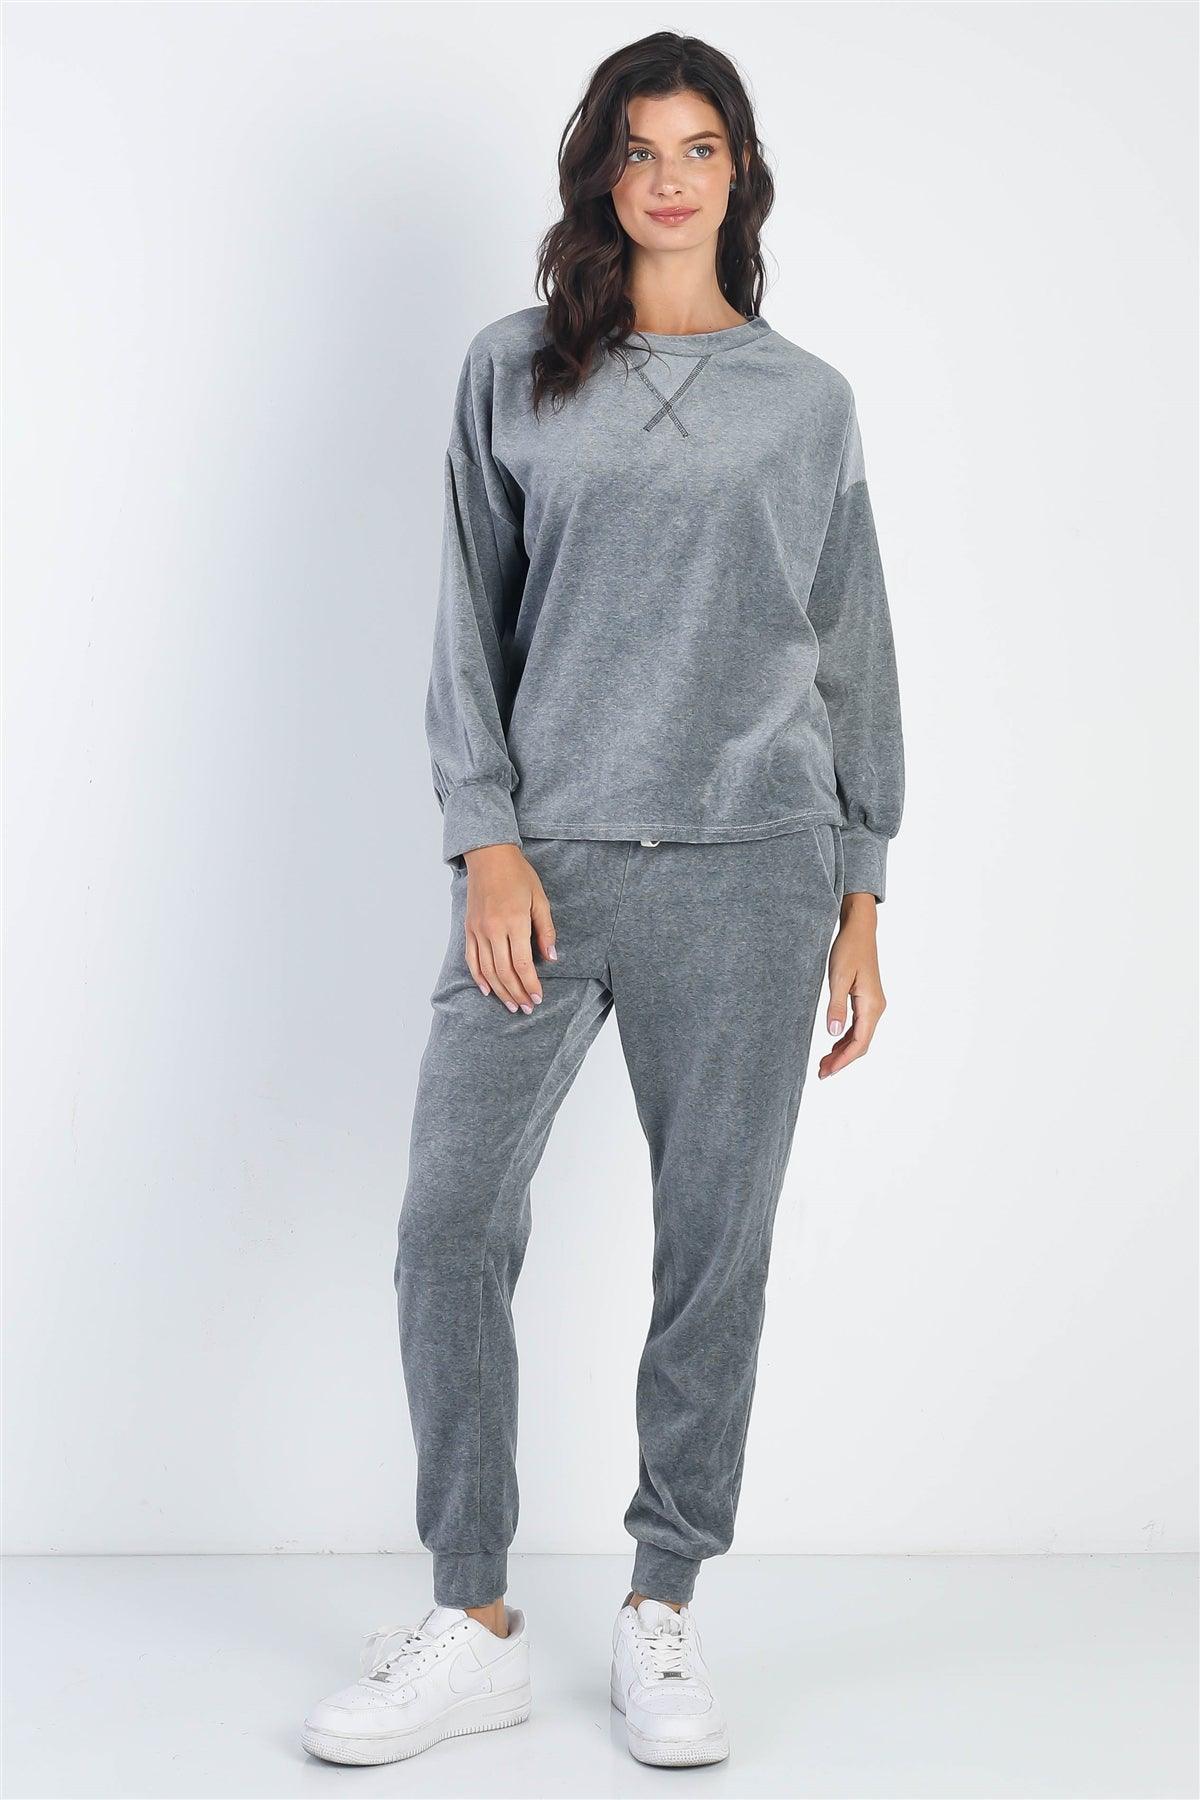 Charcoal Velour Cotton Blend Long Sleeve Sweater & Pant Set  /1-1-1